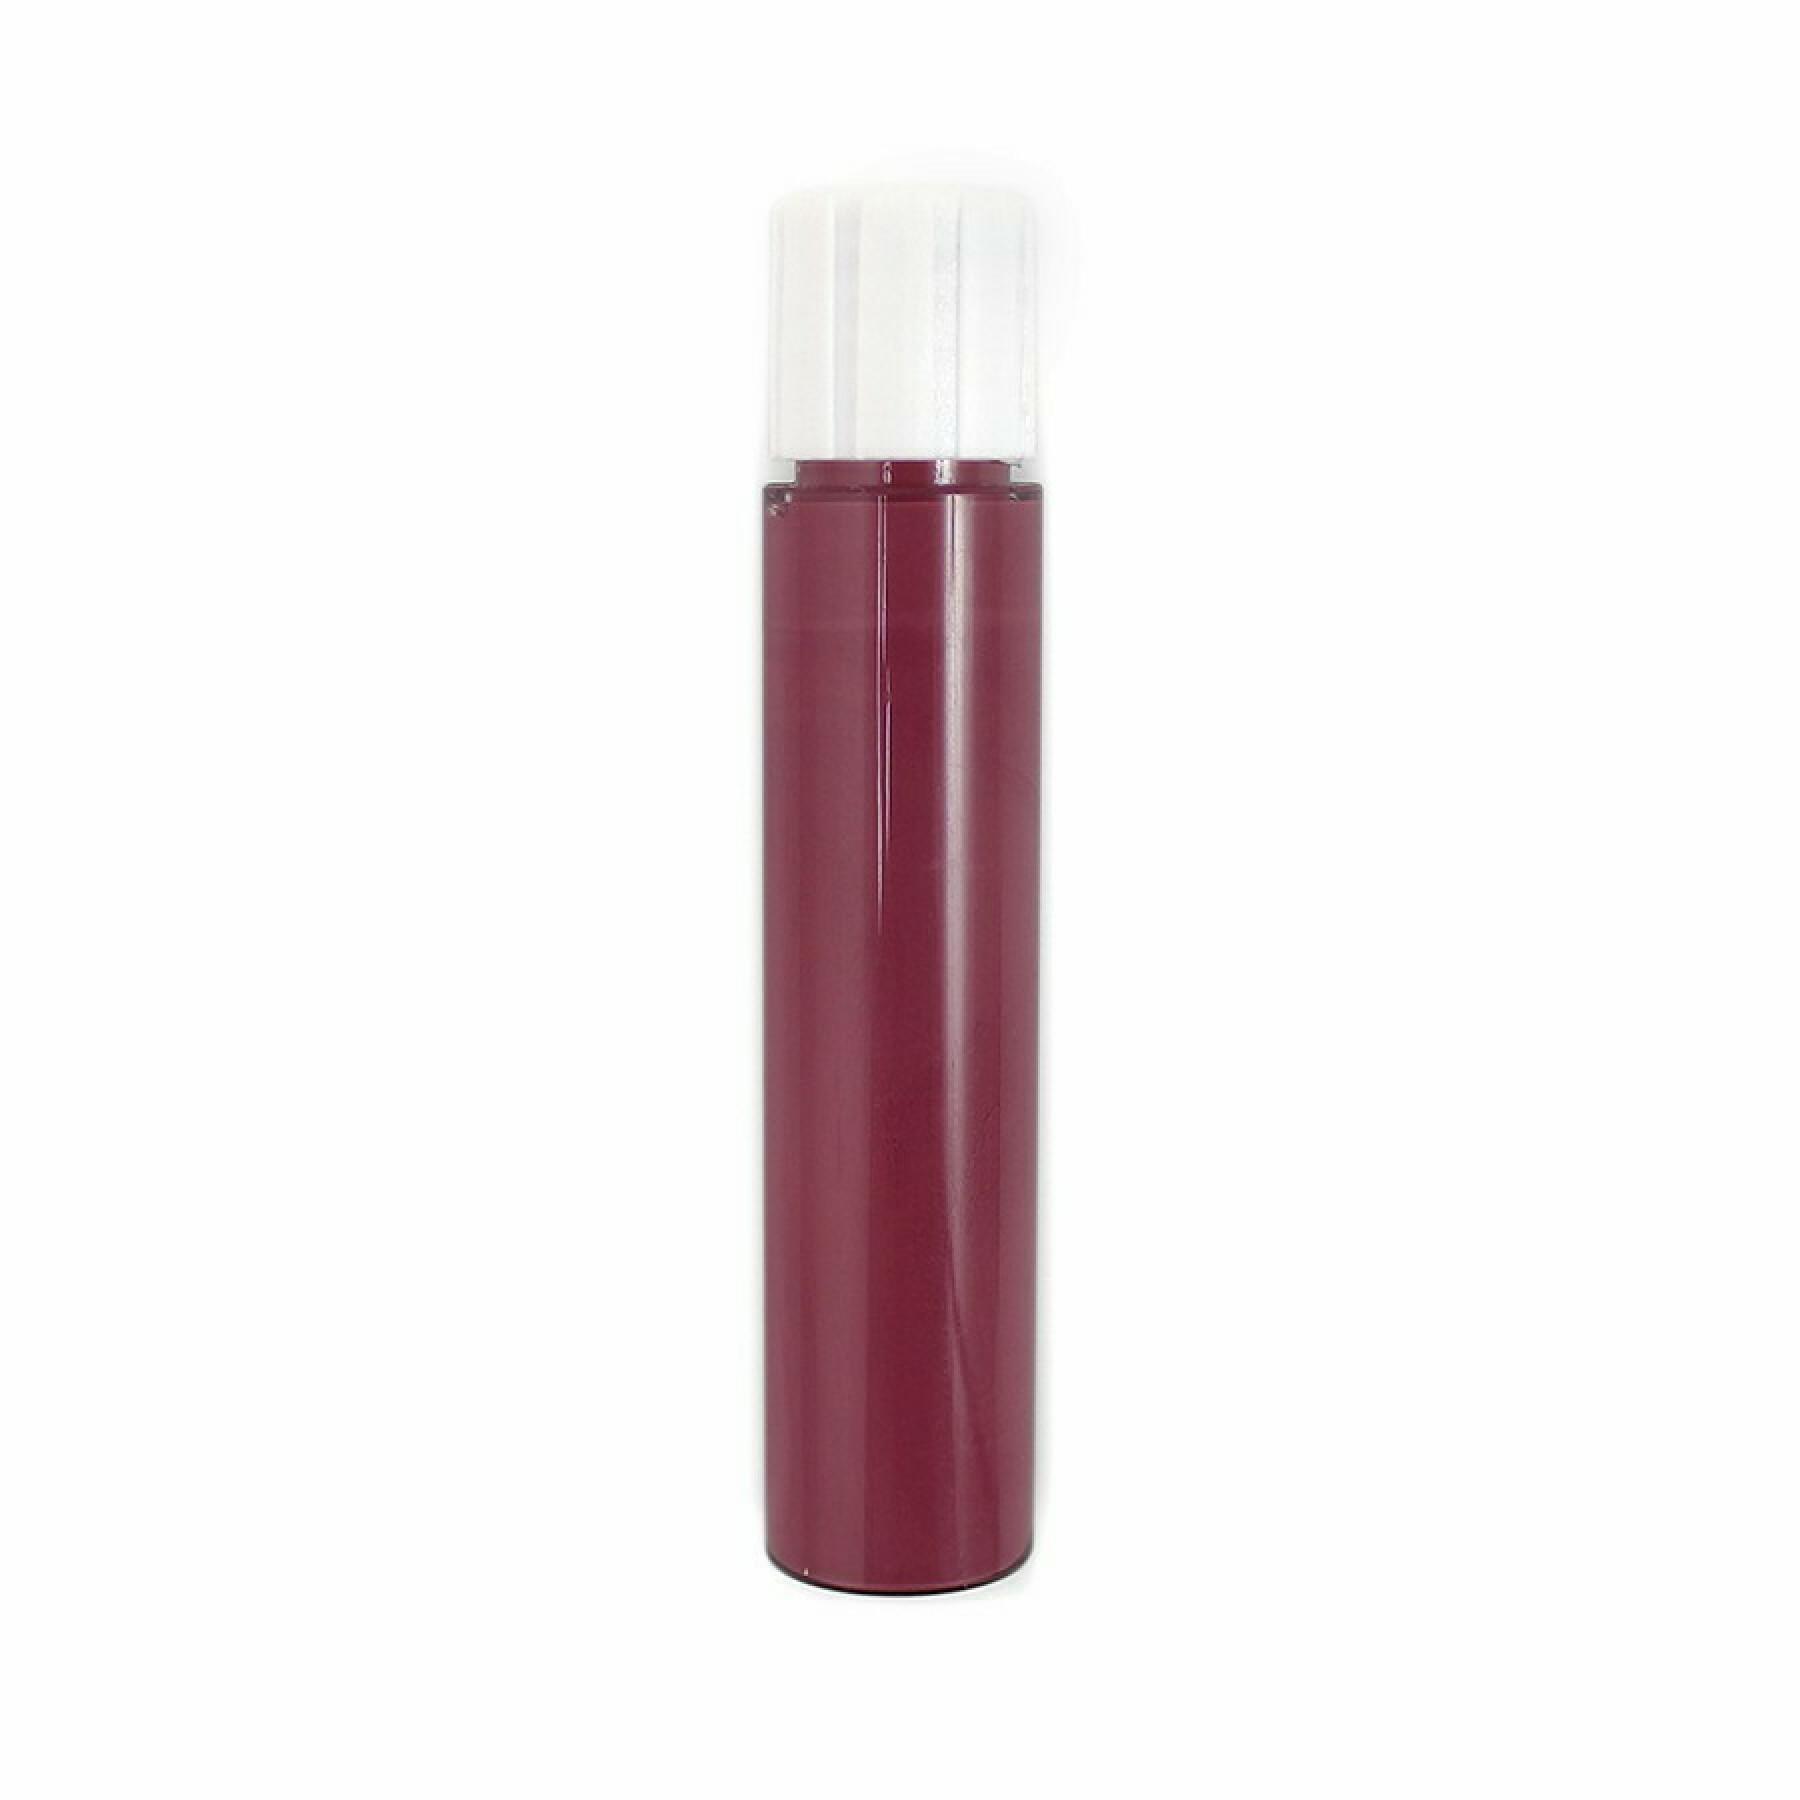 Recarga de tinta labial 442 burgundy chic woman Zao - 3,8 ml